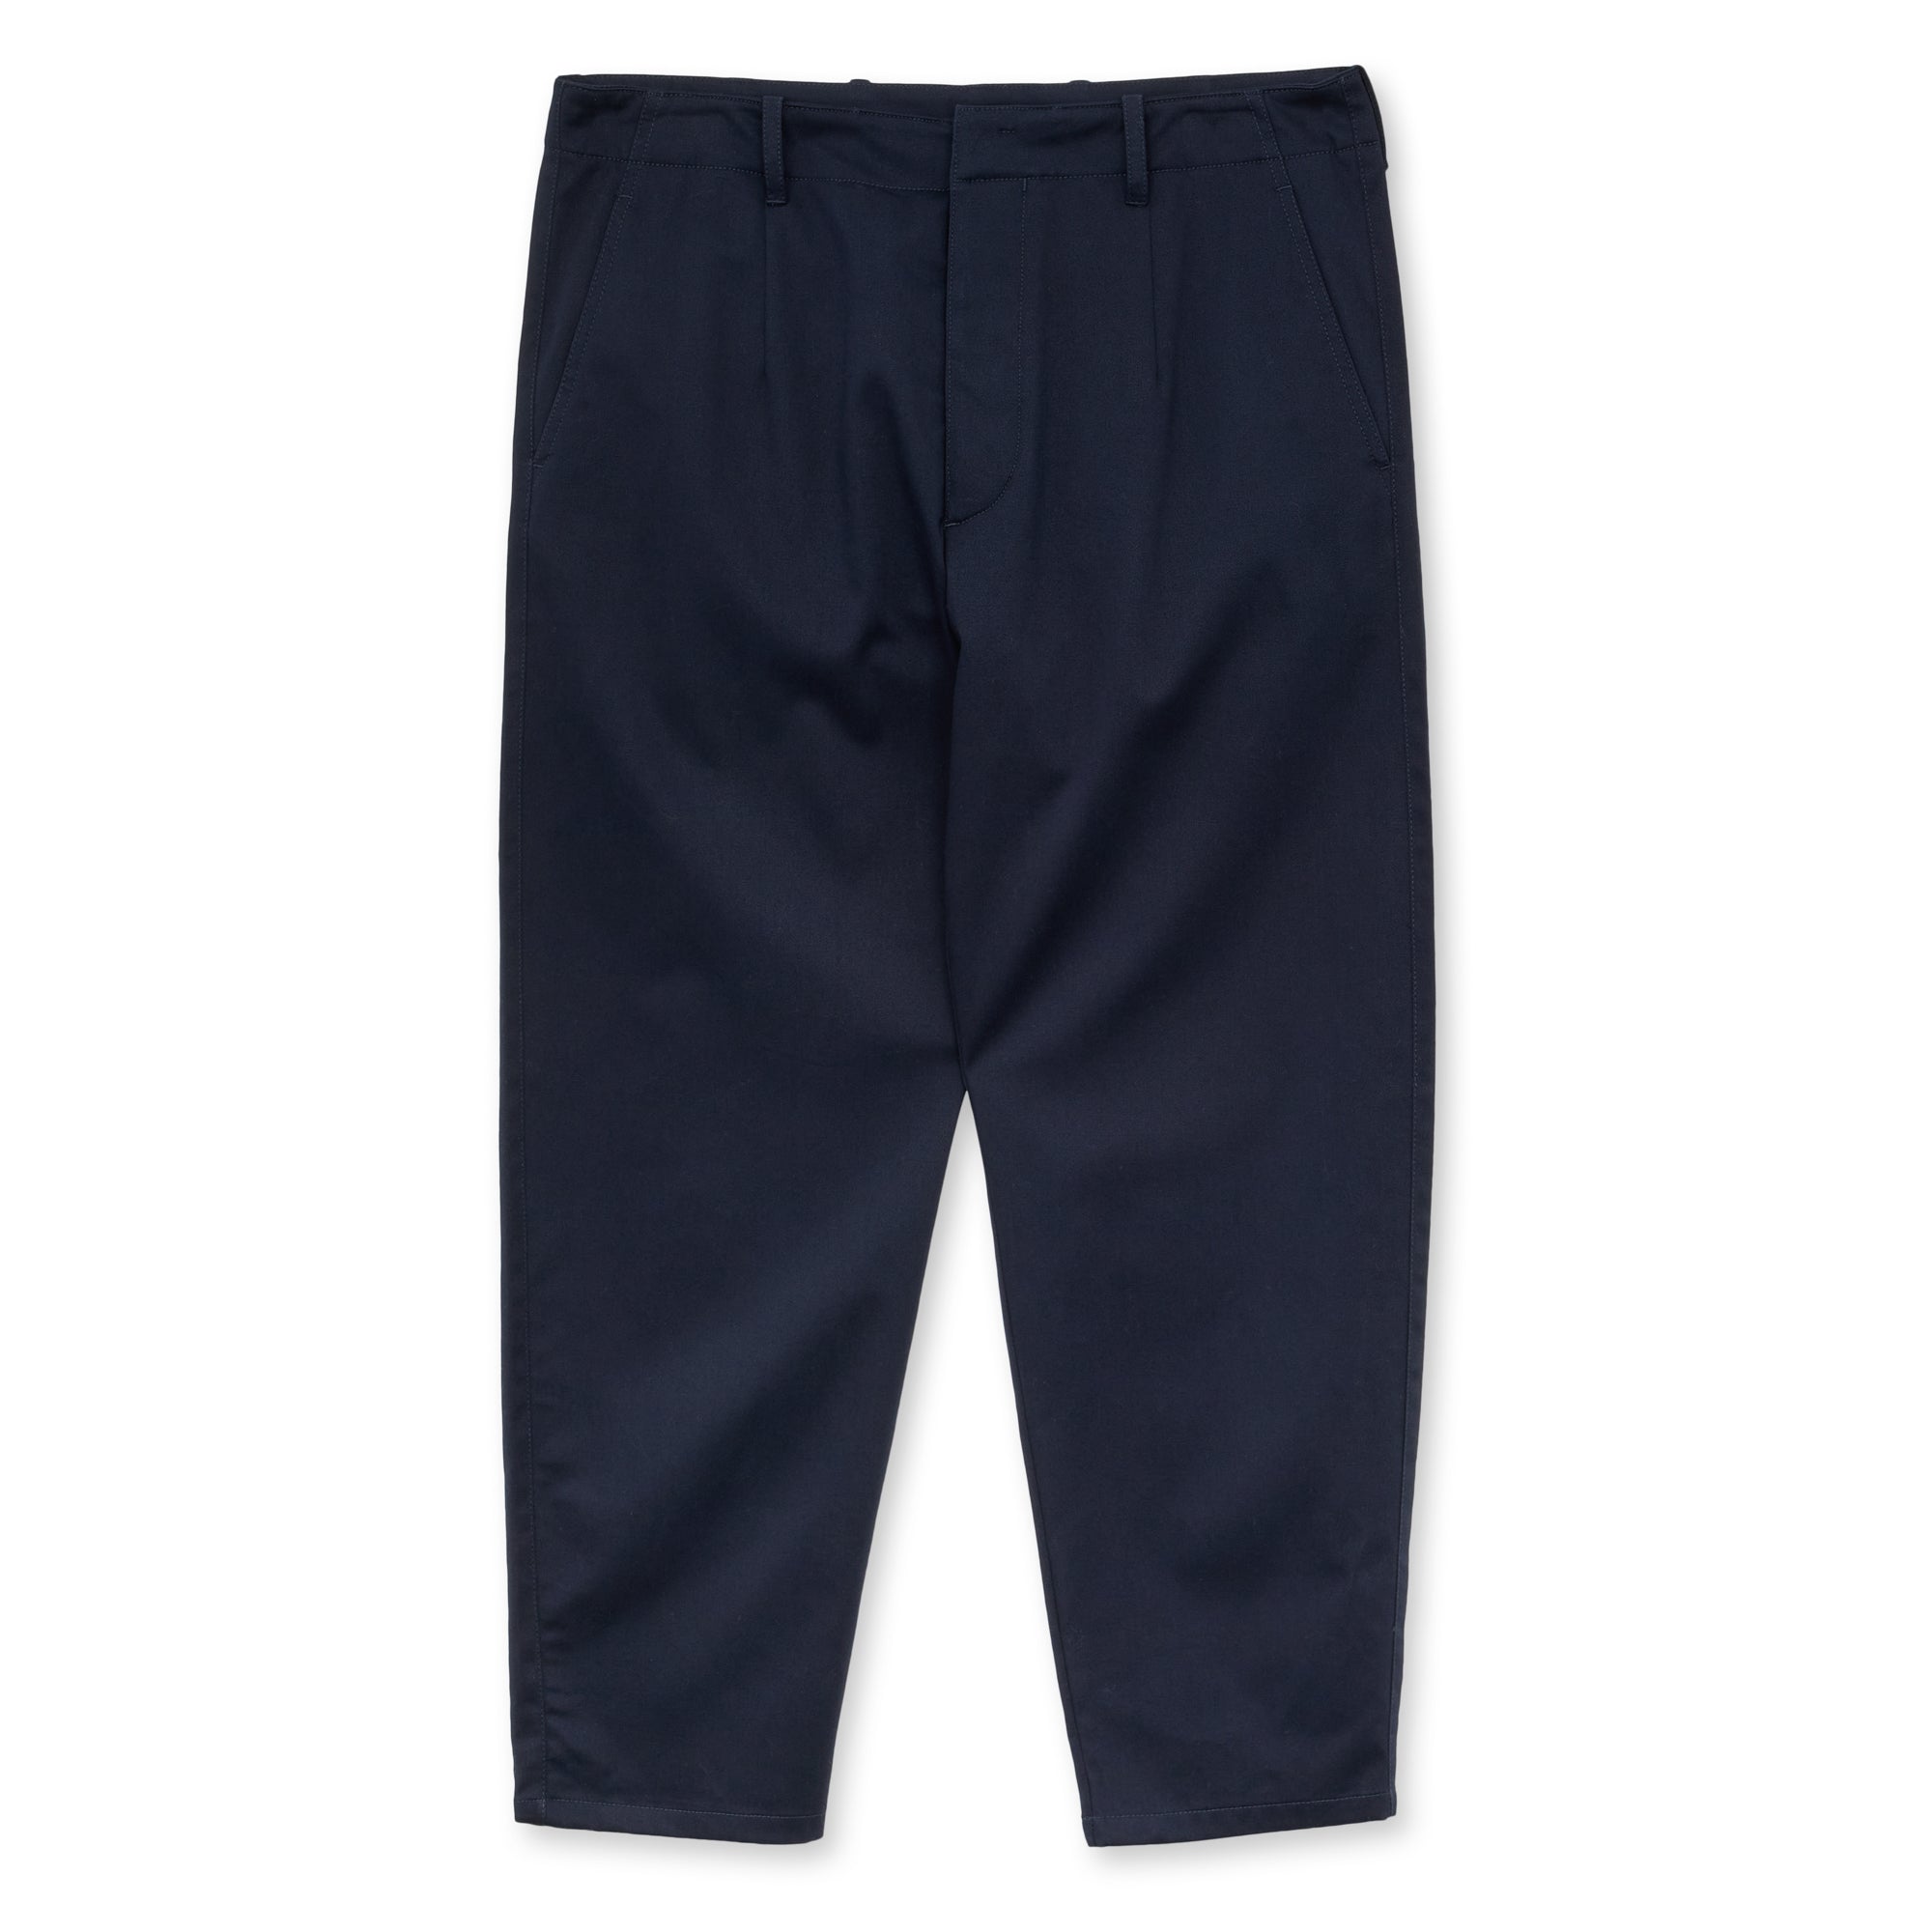 Prada - Men’s Cotton Trousers - (Navy) view 5